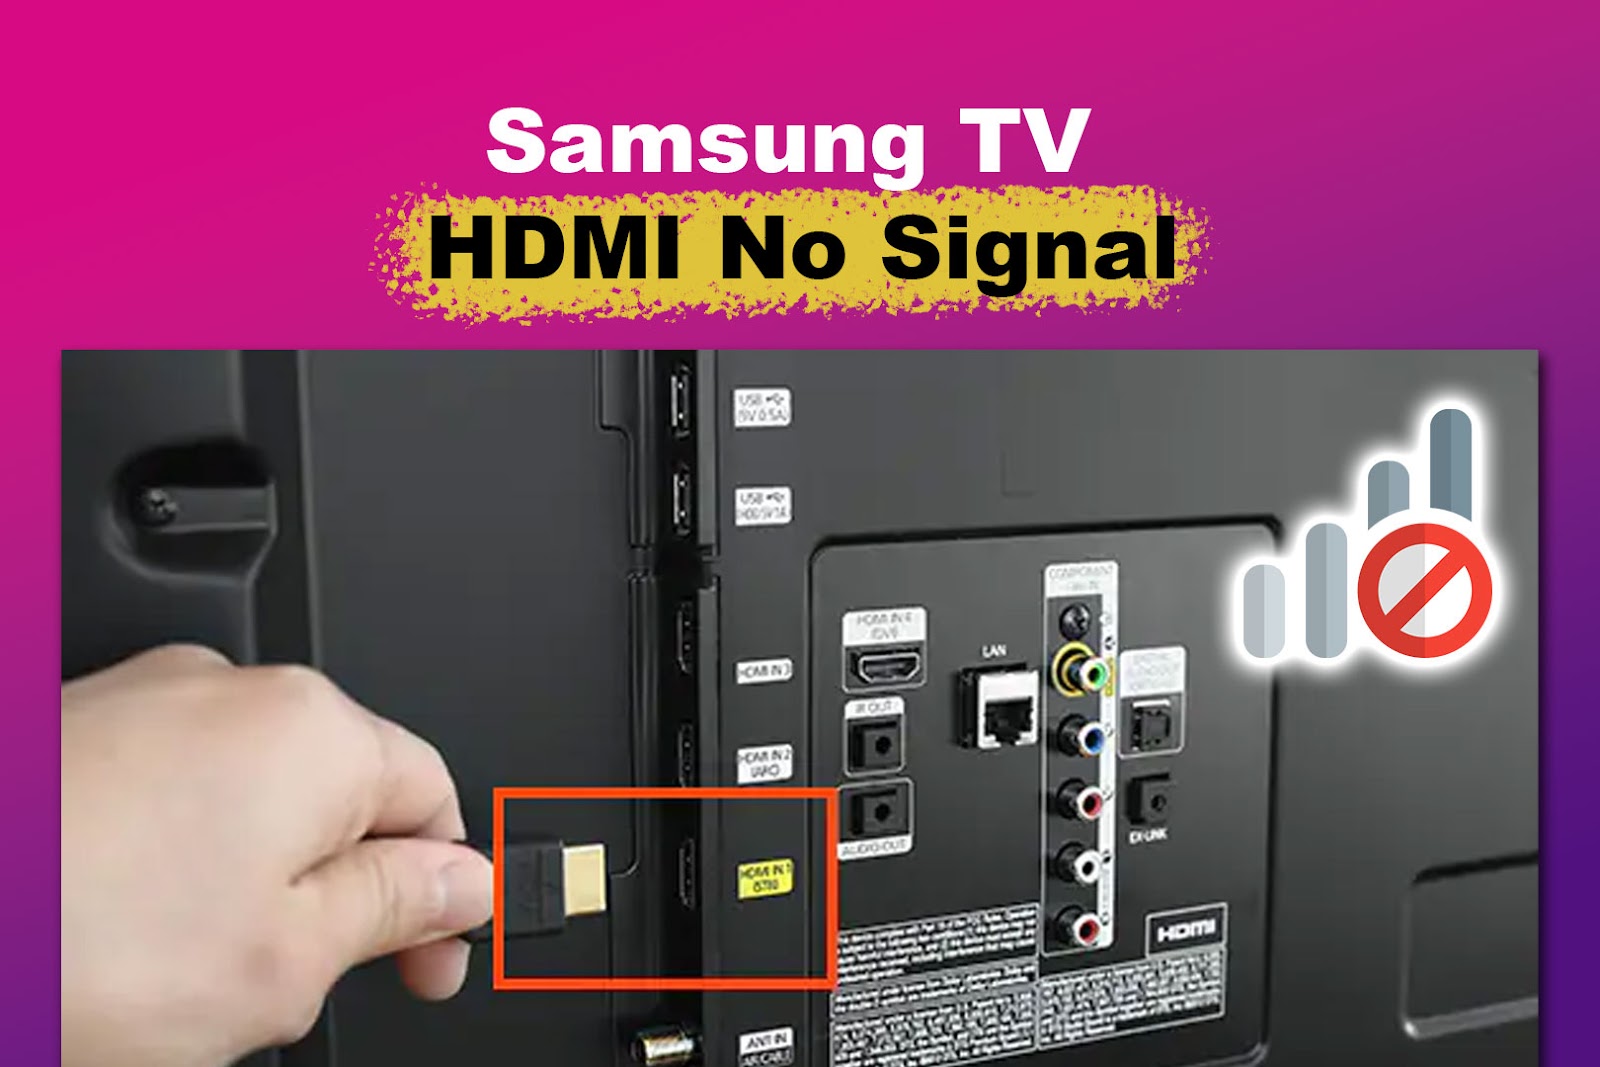 Samsung TV HDMI No Signal